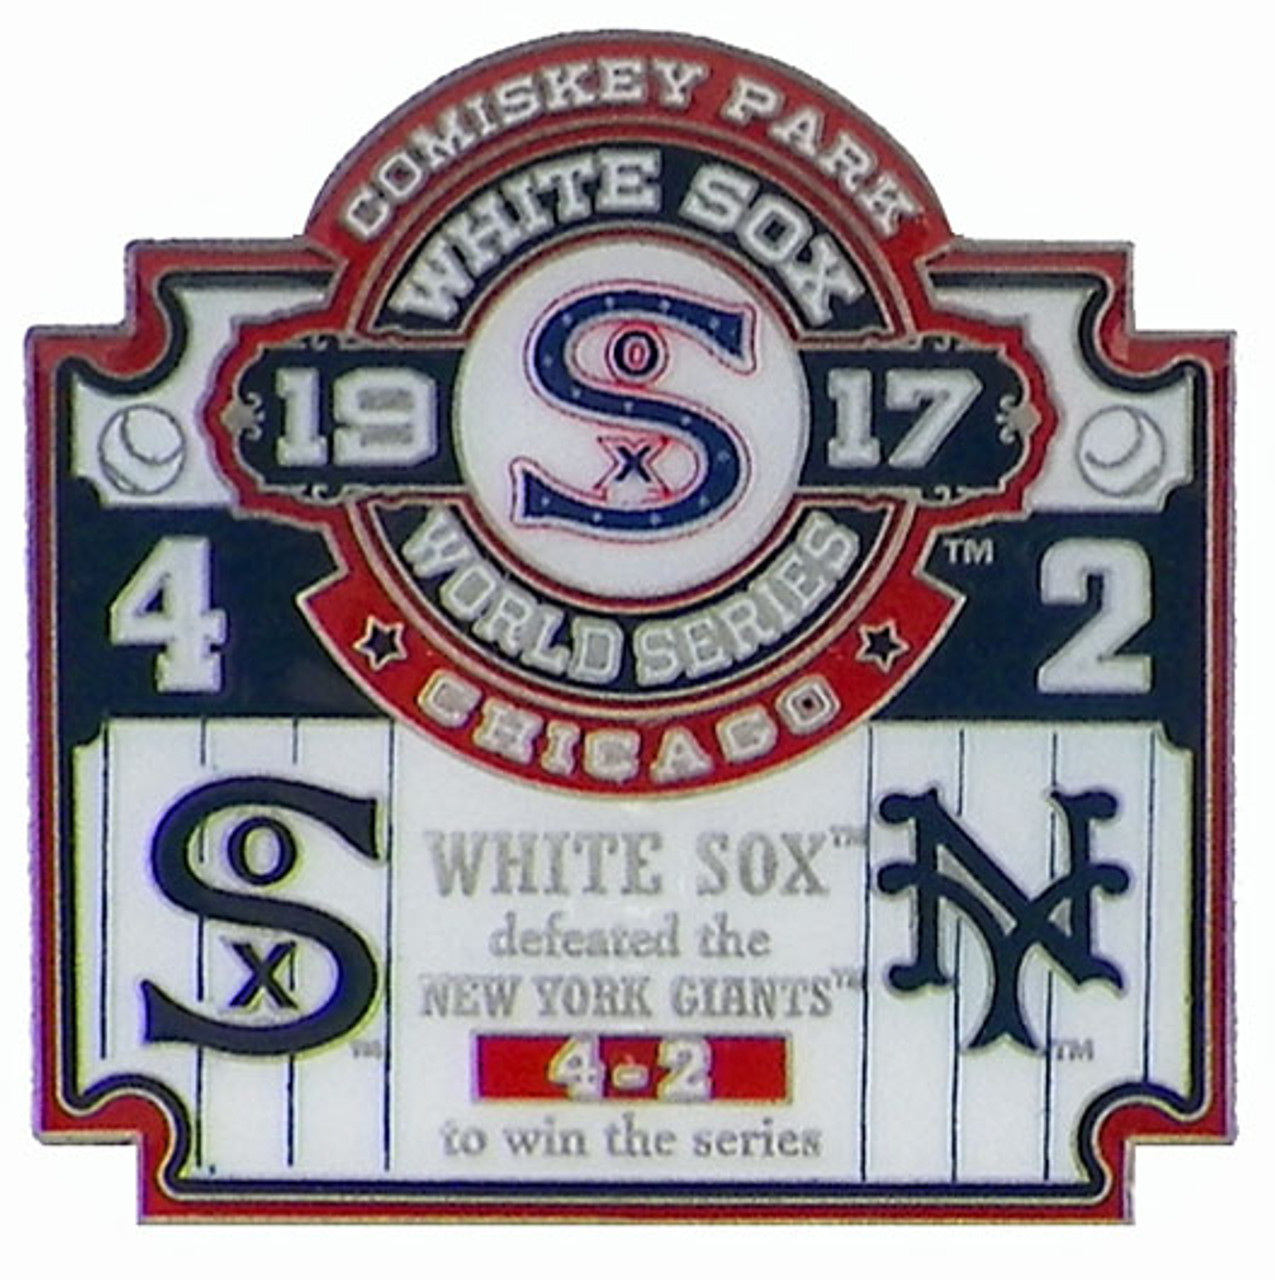 1917 World Series Commemorative Pin - White Sox vs. Giants